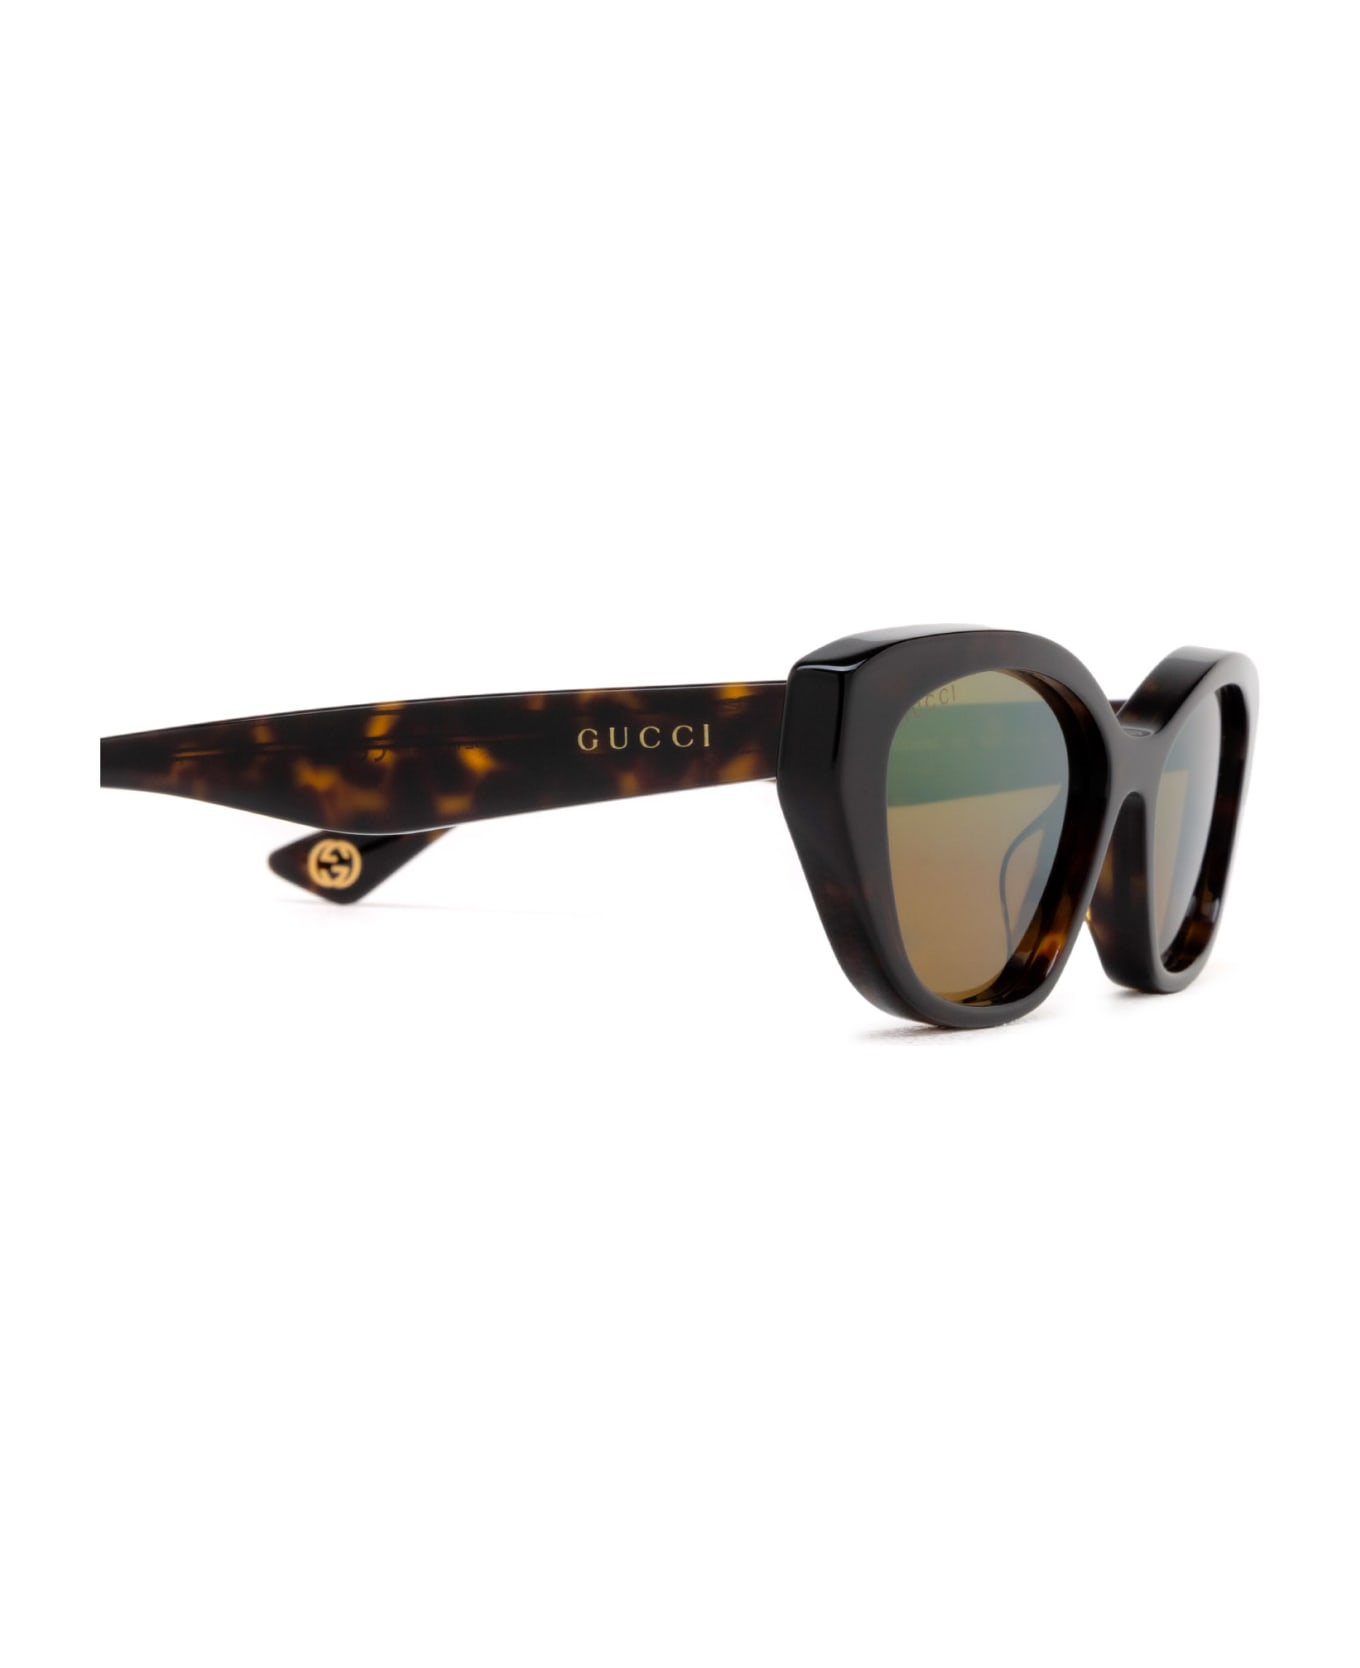 Gucci Eyewear Gg1638s Havana Sunglasses - Havana